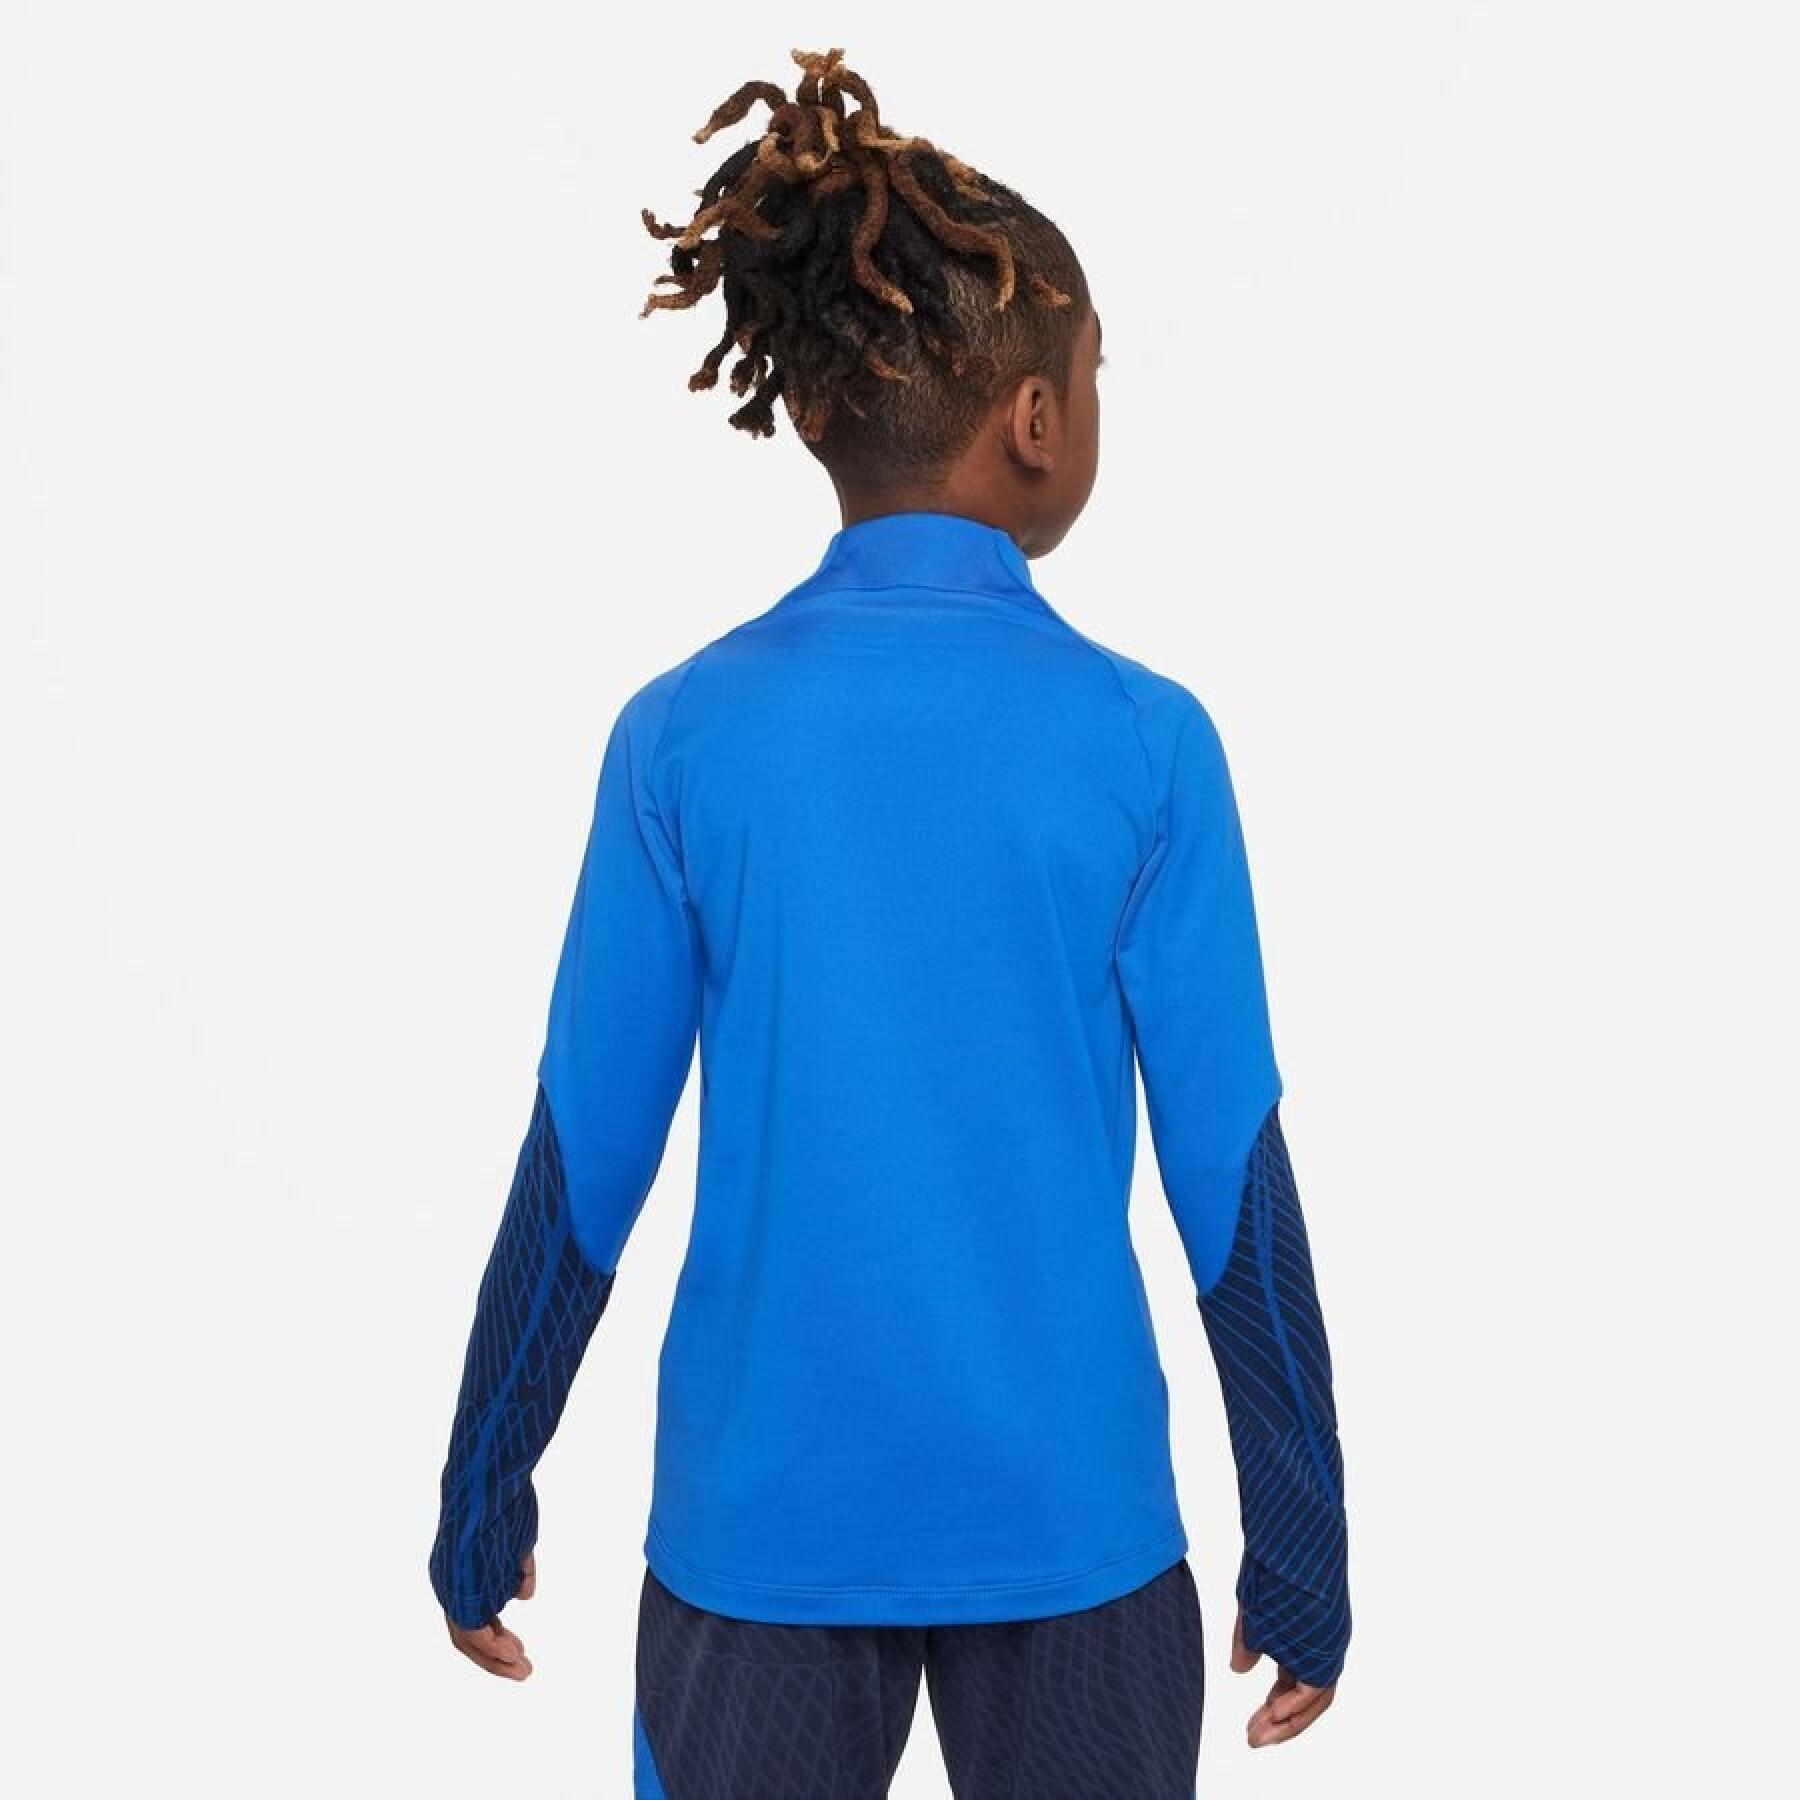 Kinder-Trainingsjacke Nike Dri-Fit Strike